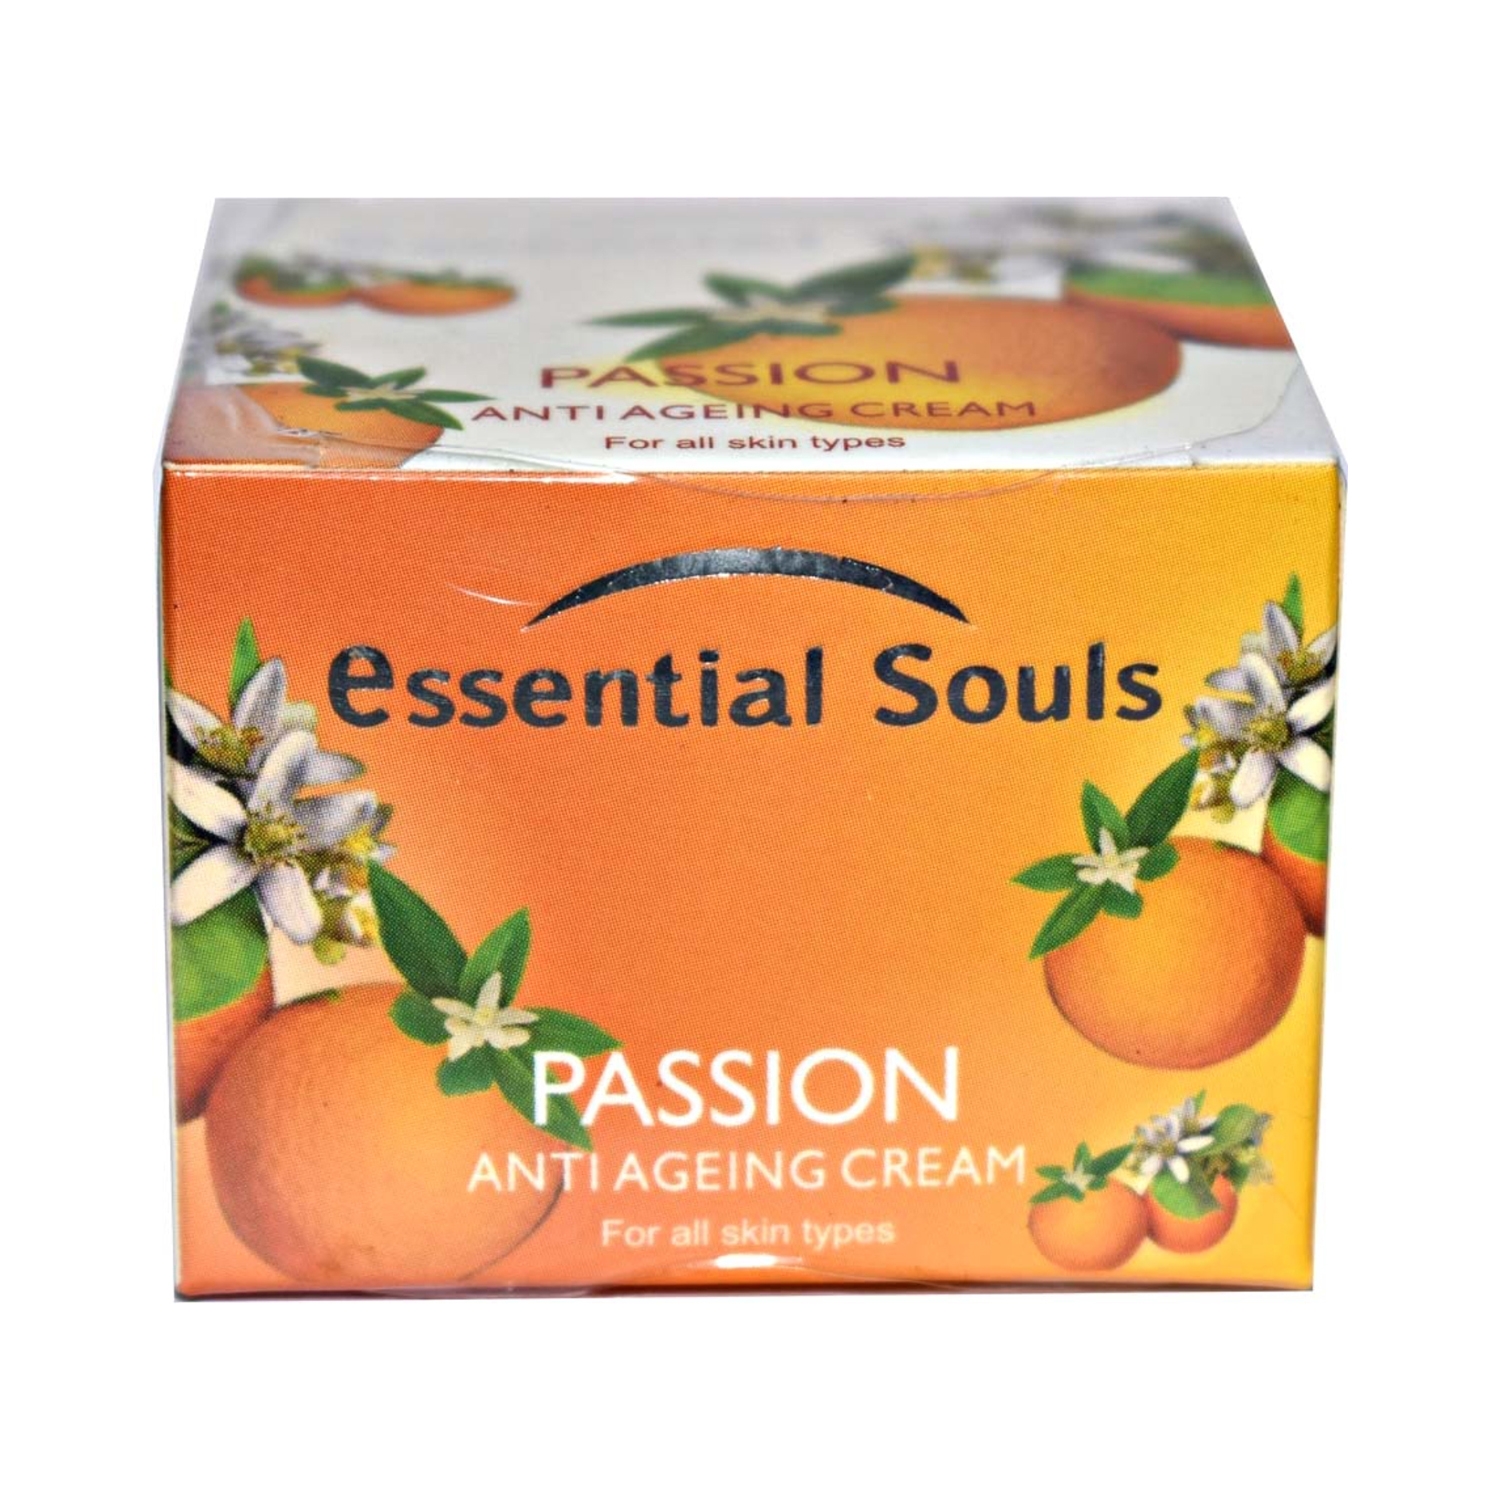 Essential Souls | Essential Souls Passion Anti Ageing Cream (50g)